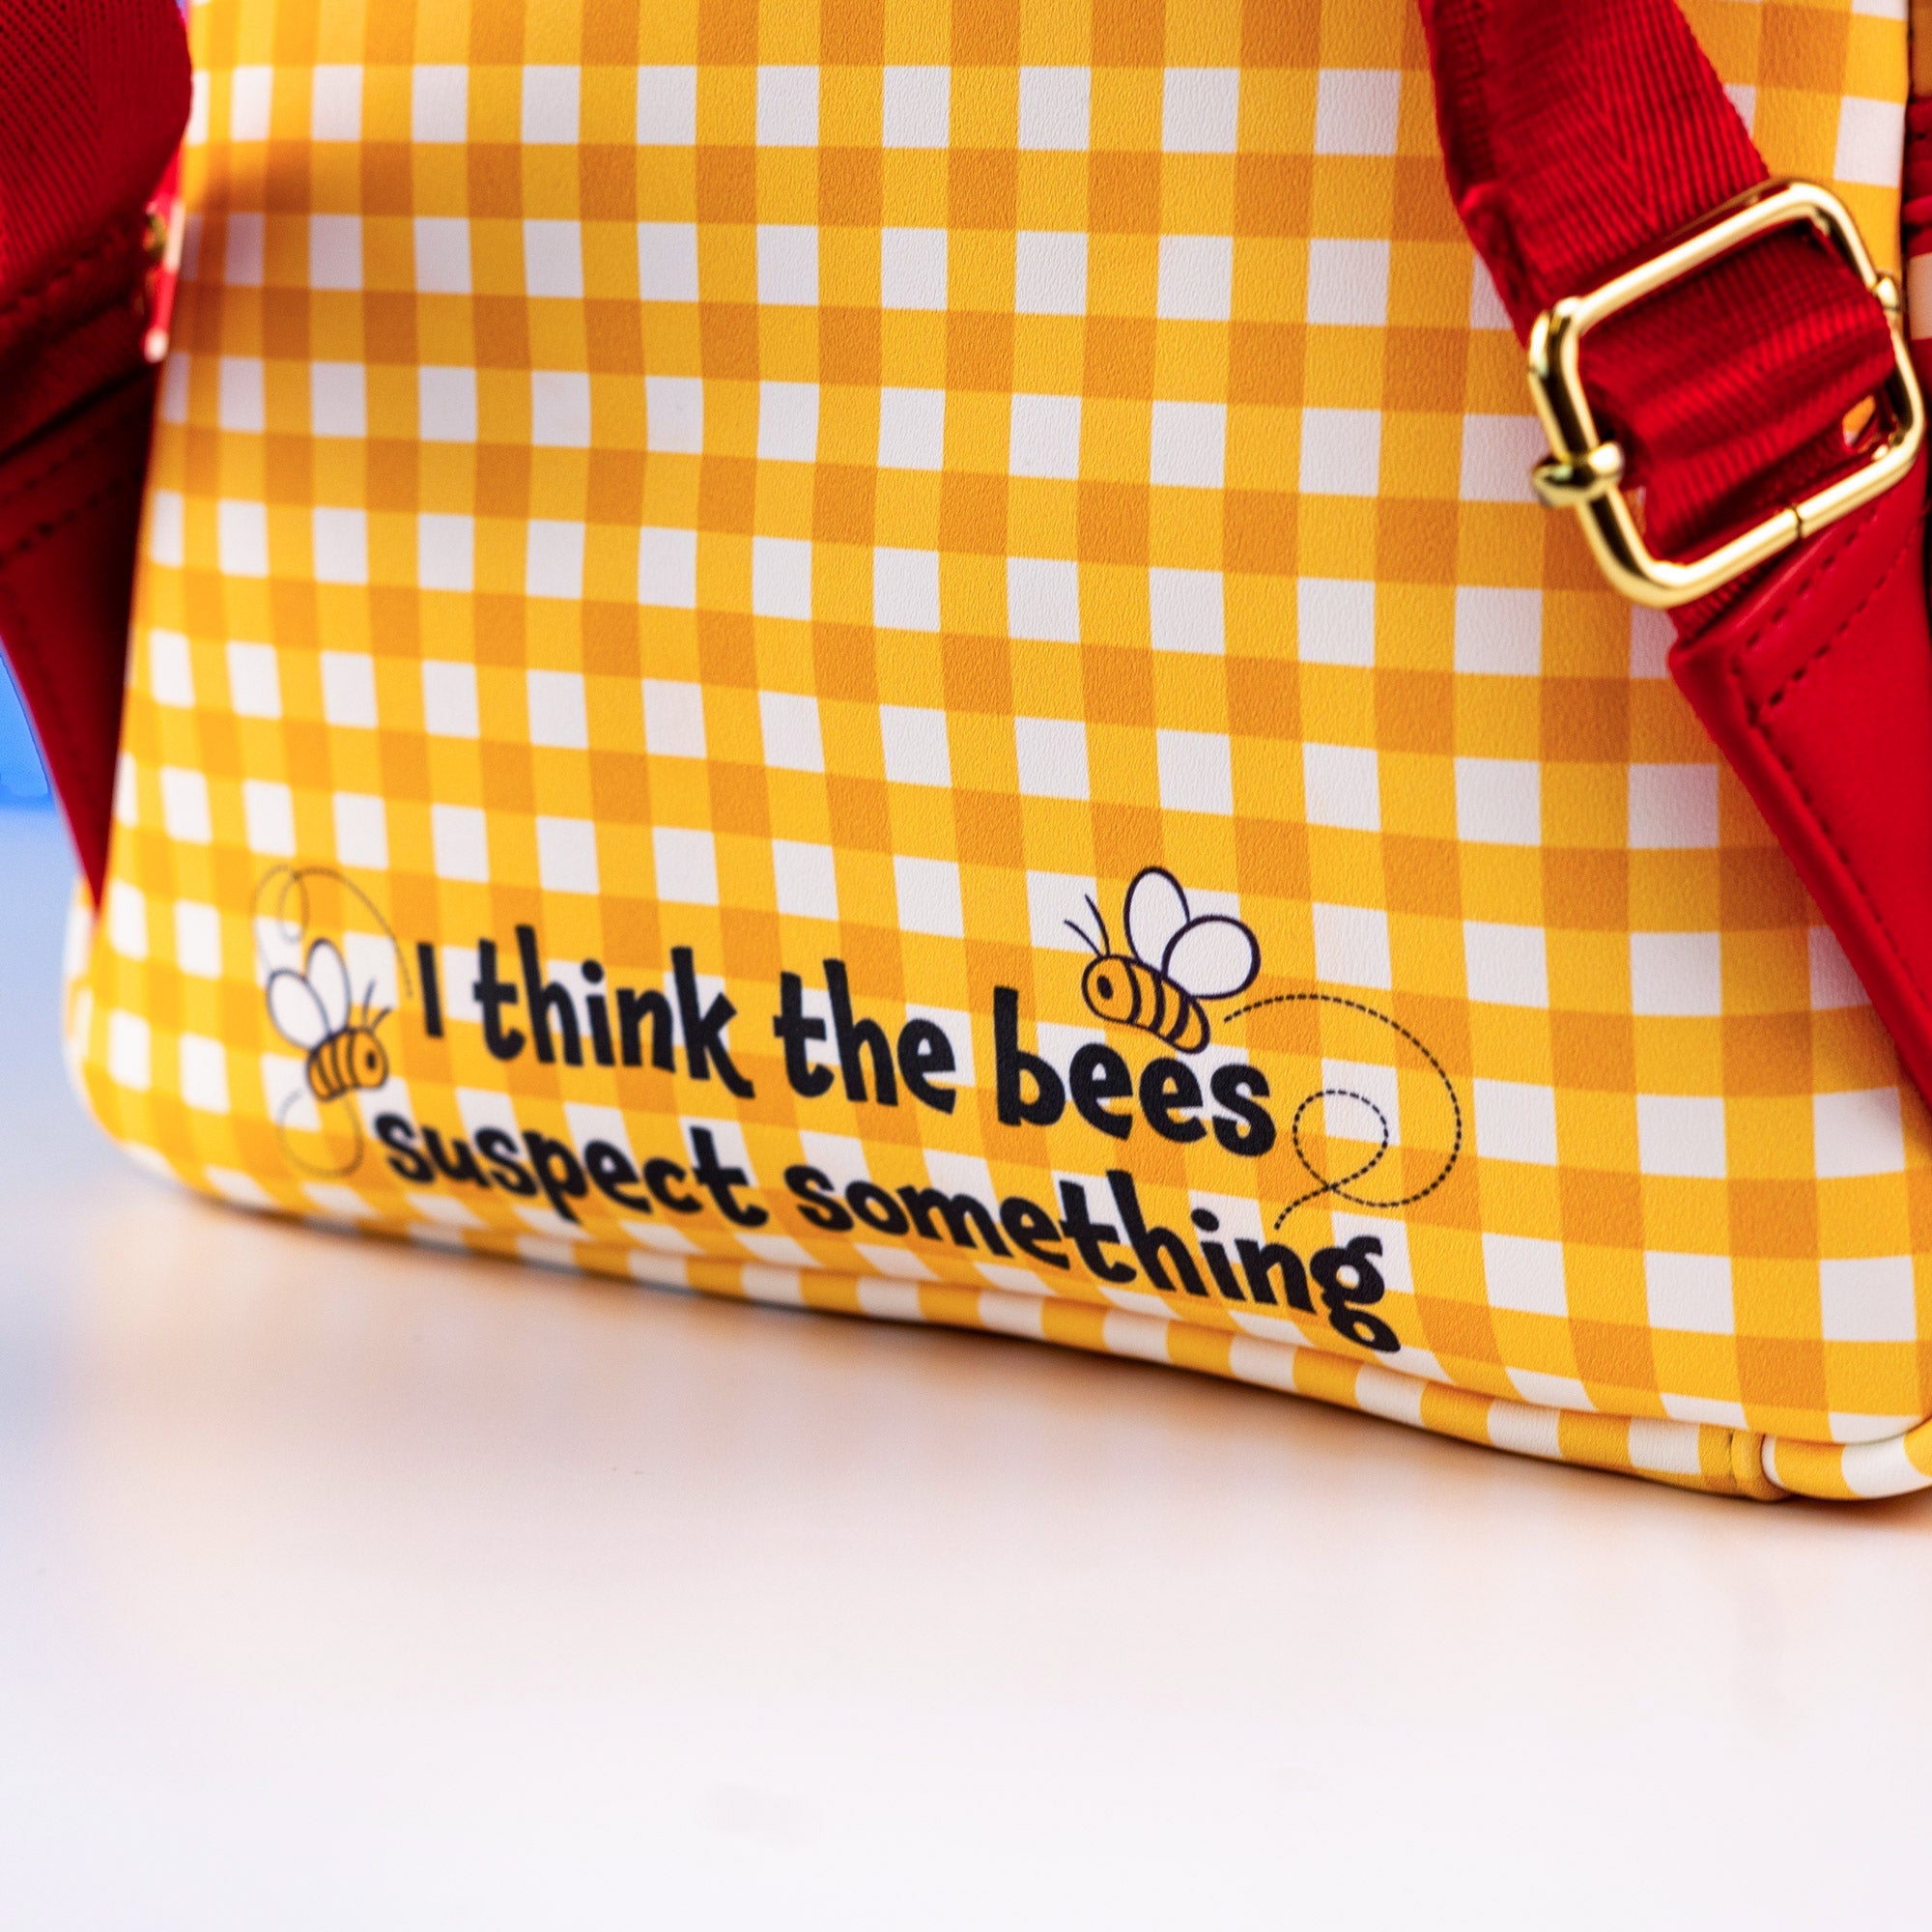 Loungefly x Disney Winnie the Pooh Gingham Mini Backpack - GeekCore